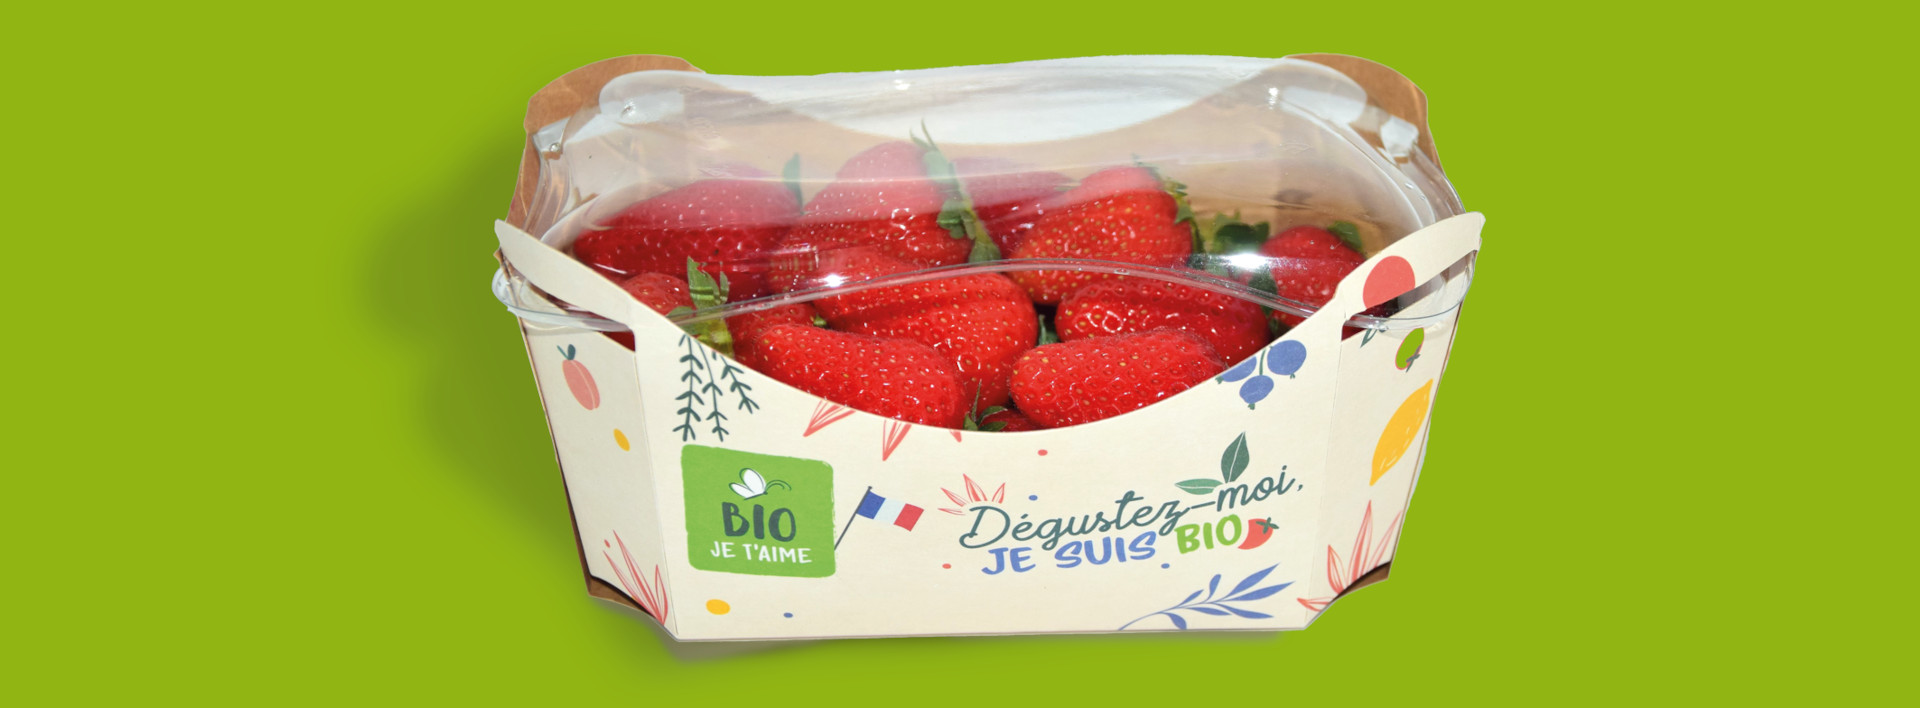 Barquette de fraises BIO